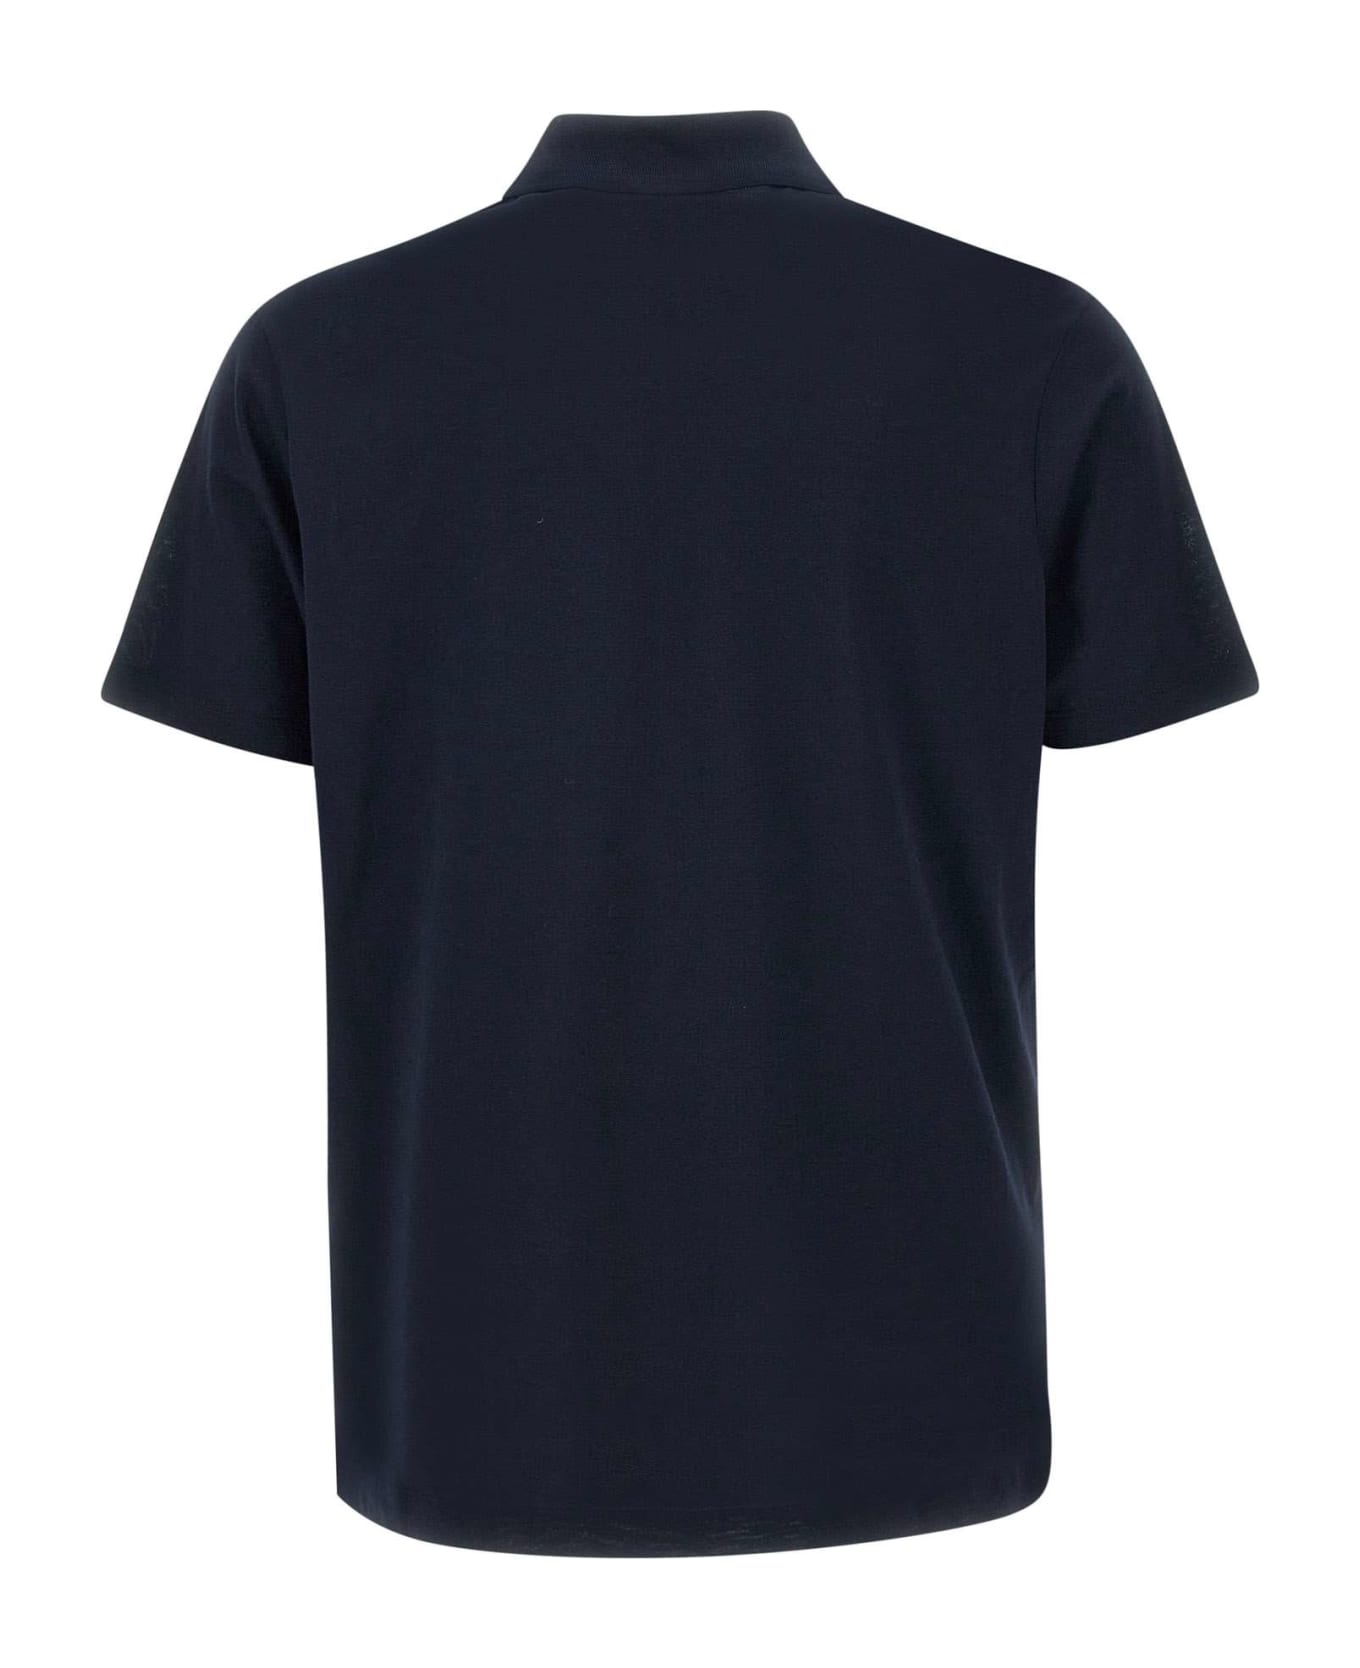 Paul&Shark Cotton Polo Shirt - BLUE